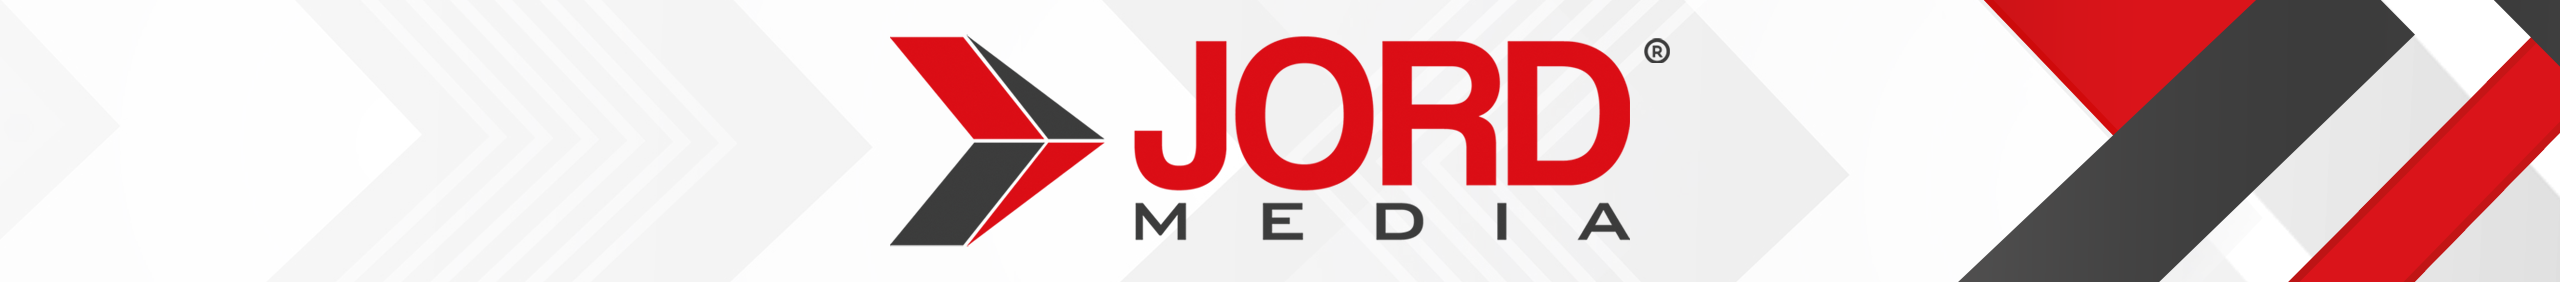 JORD MEDIA's profile banner